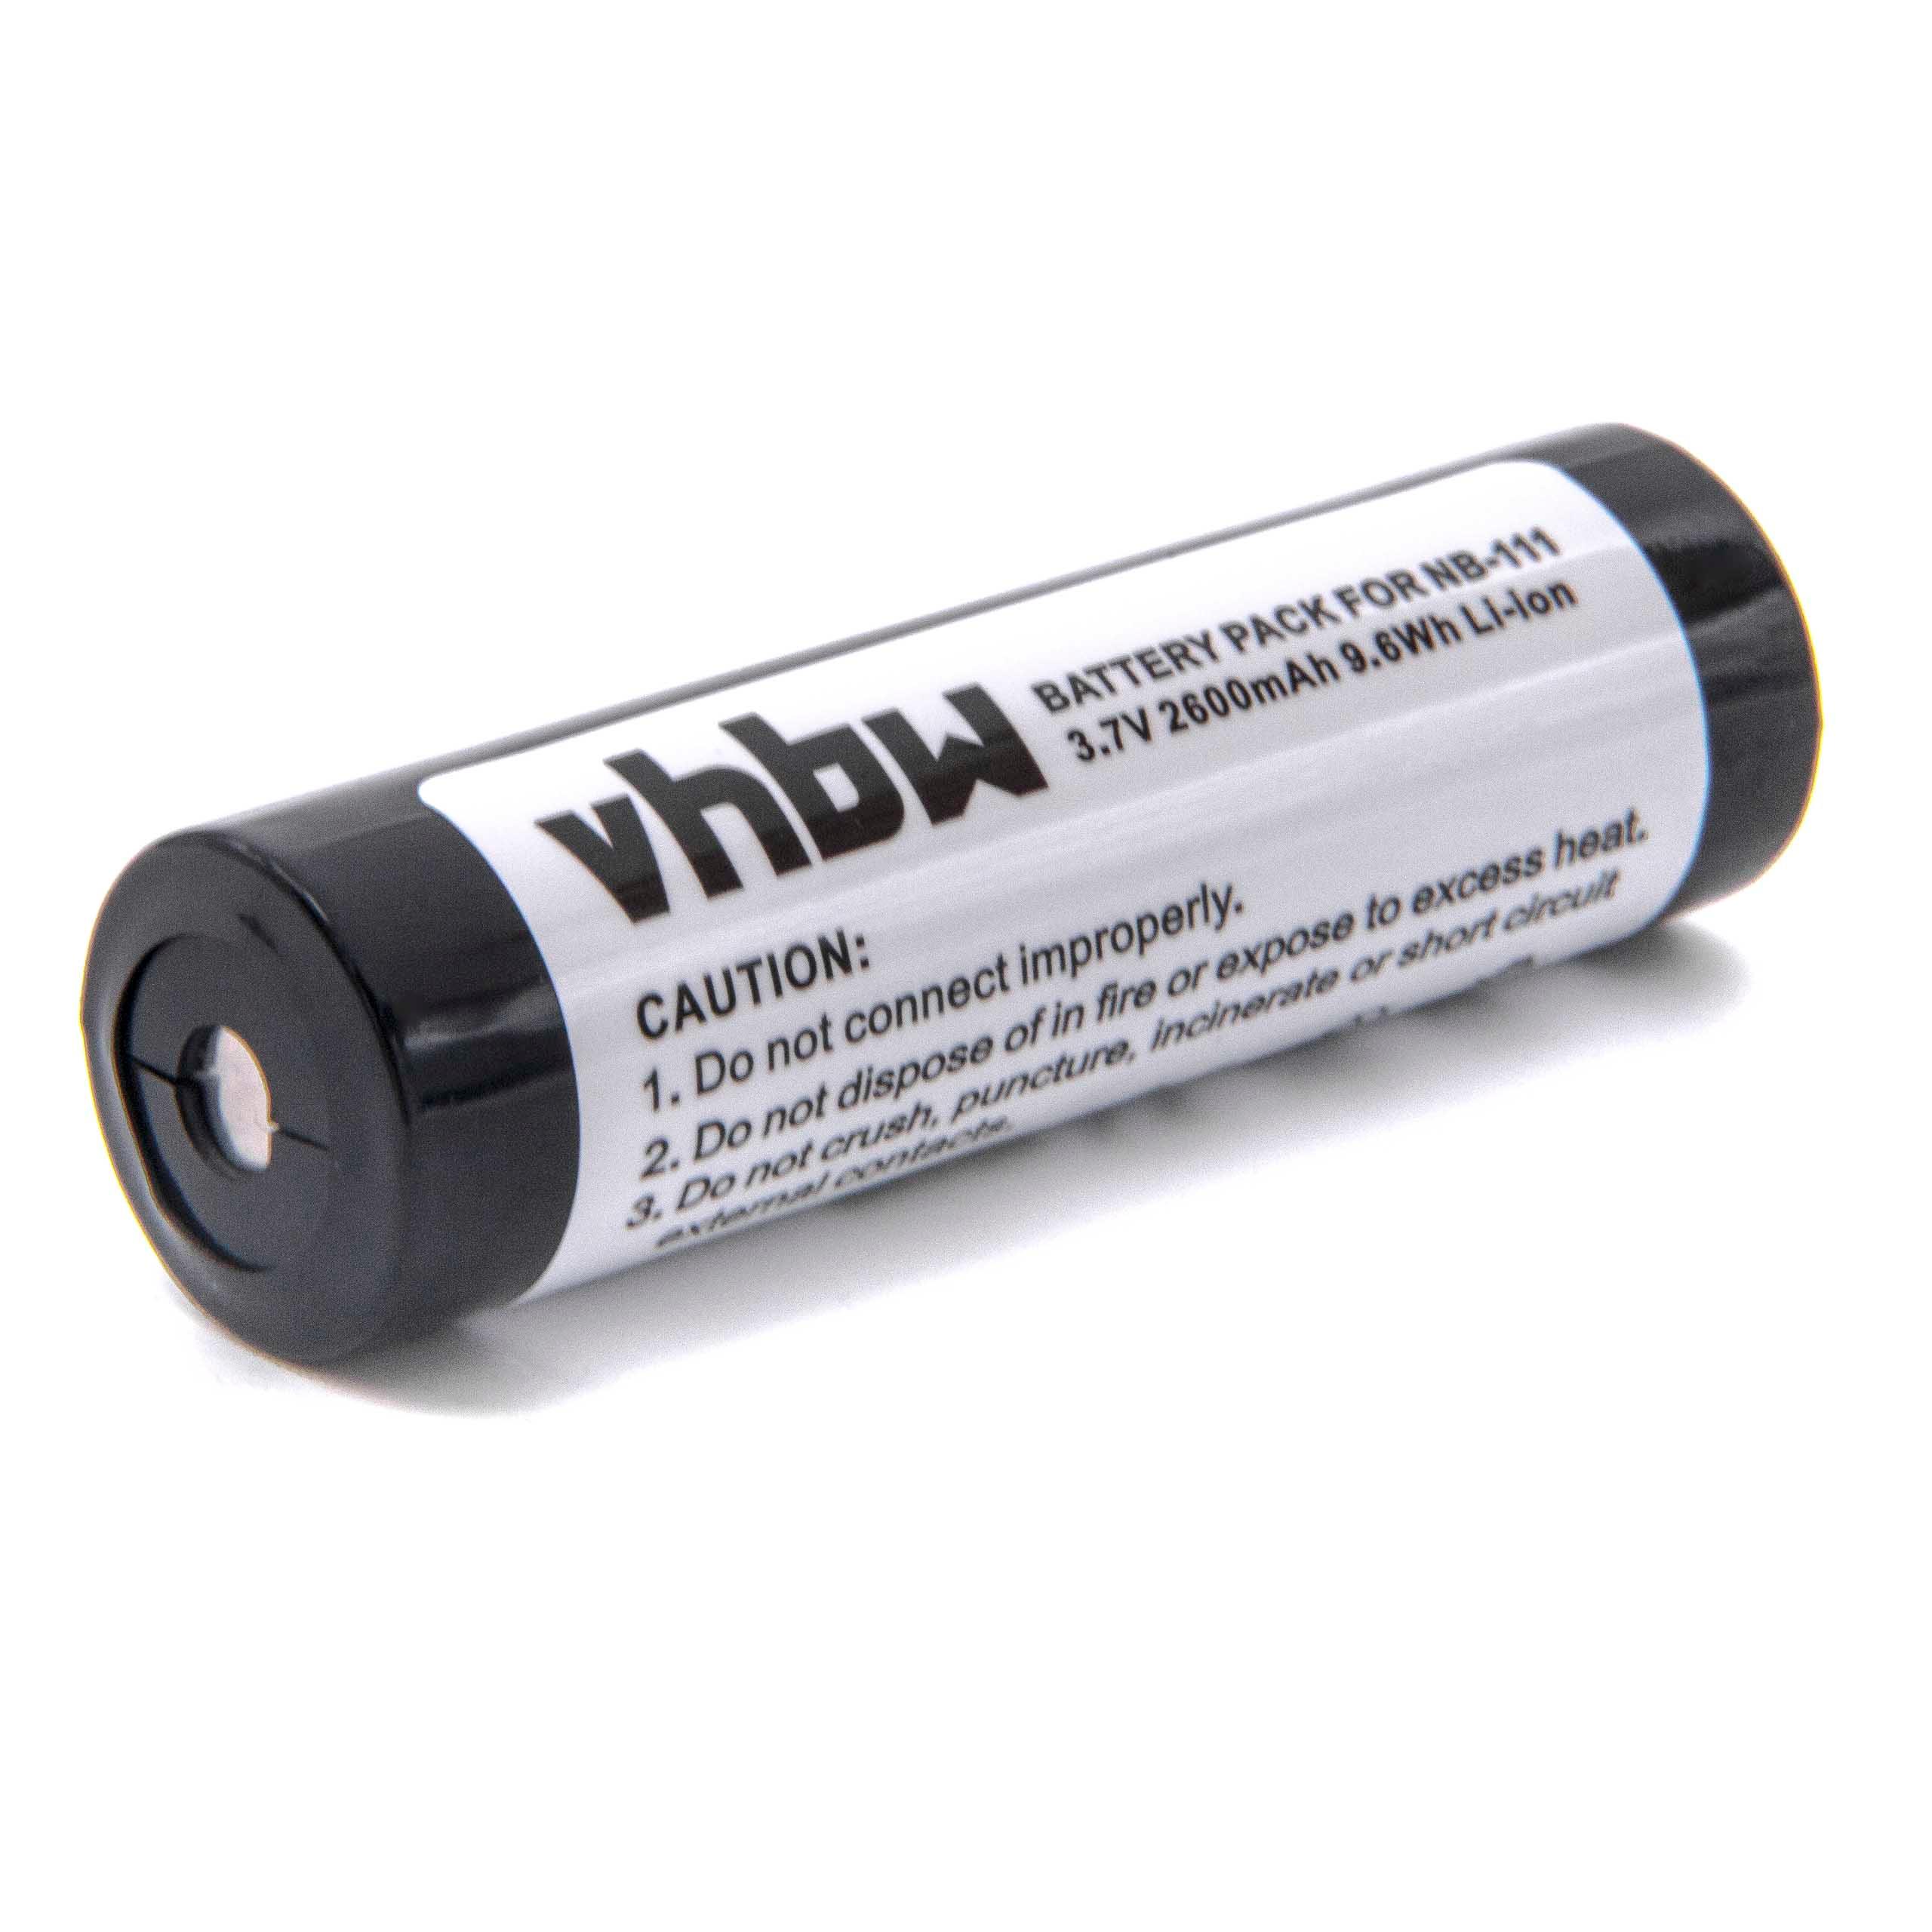 Mini Disc Battery Replacement for BP-1600R - 2600mAh 3.7V Li-Ion